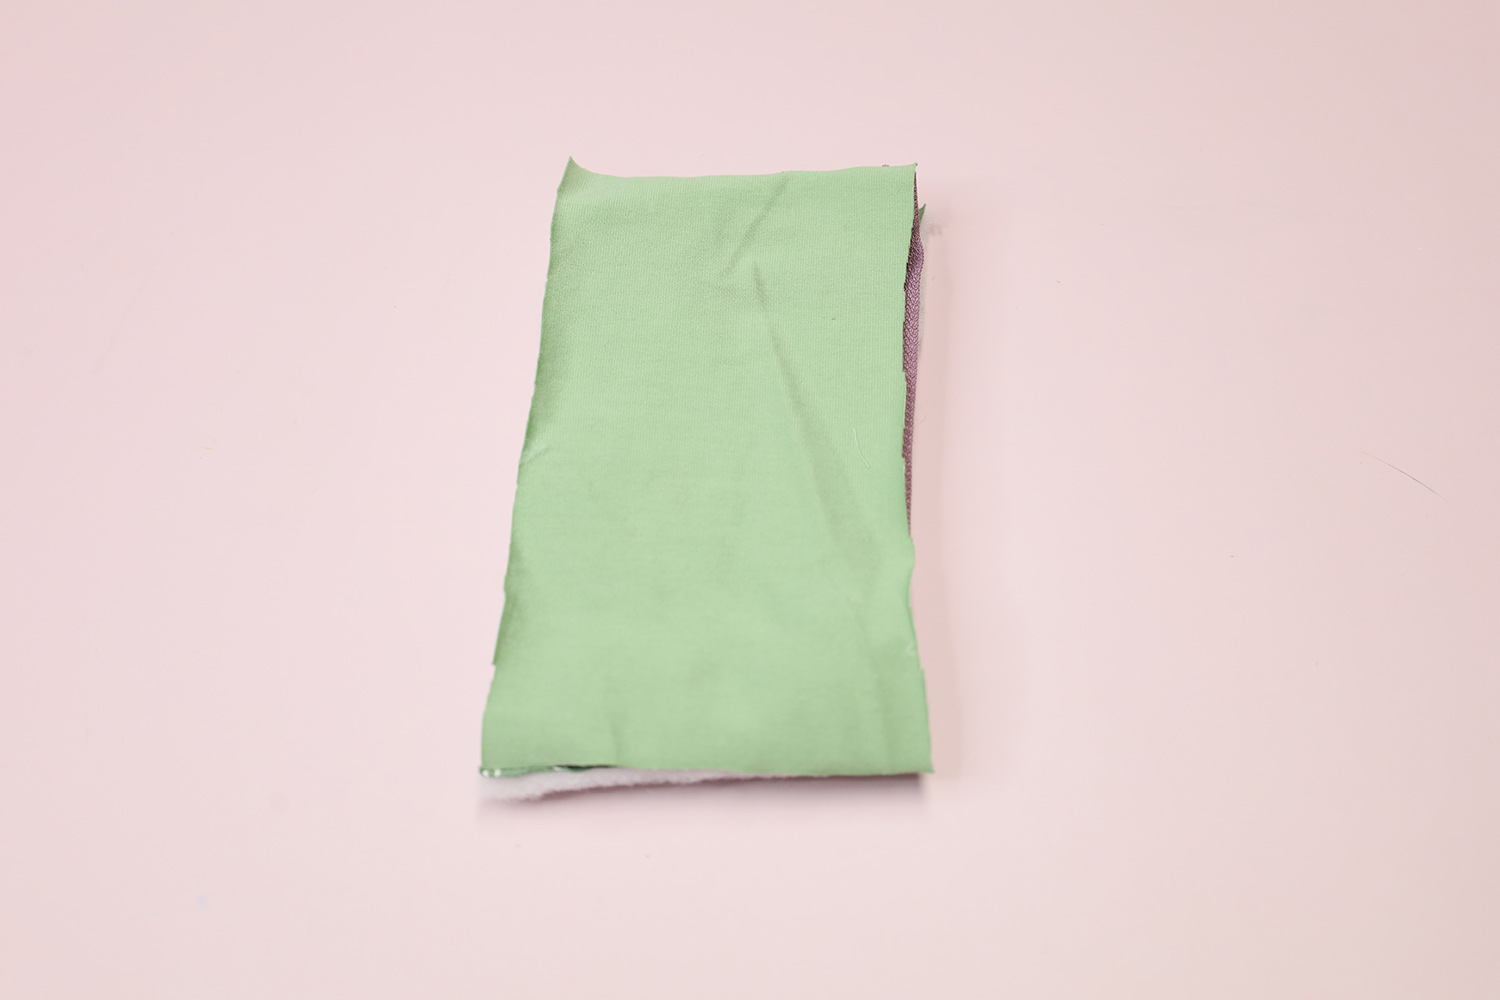 Kinderschlafsack nähen – Schnittmuster kostenlos